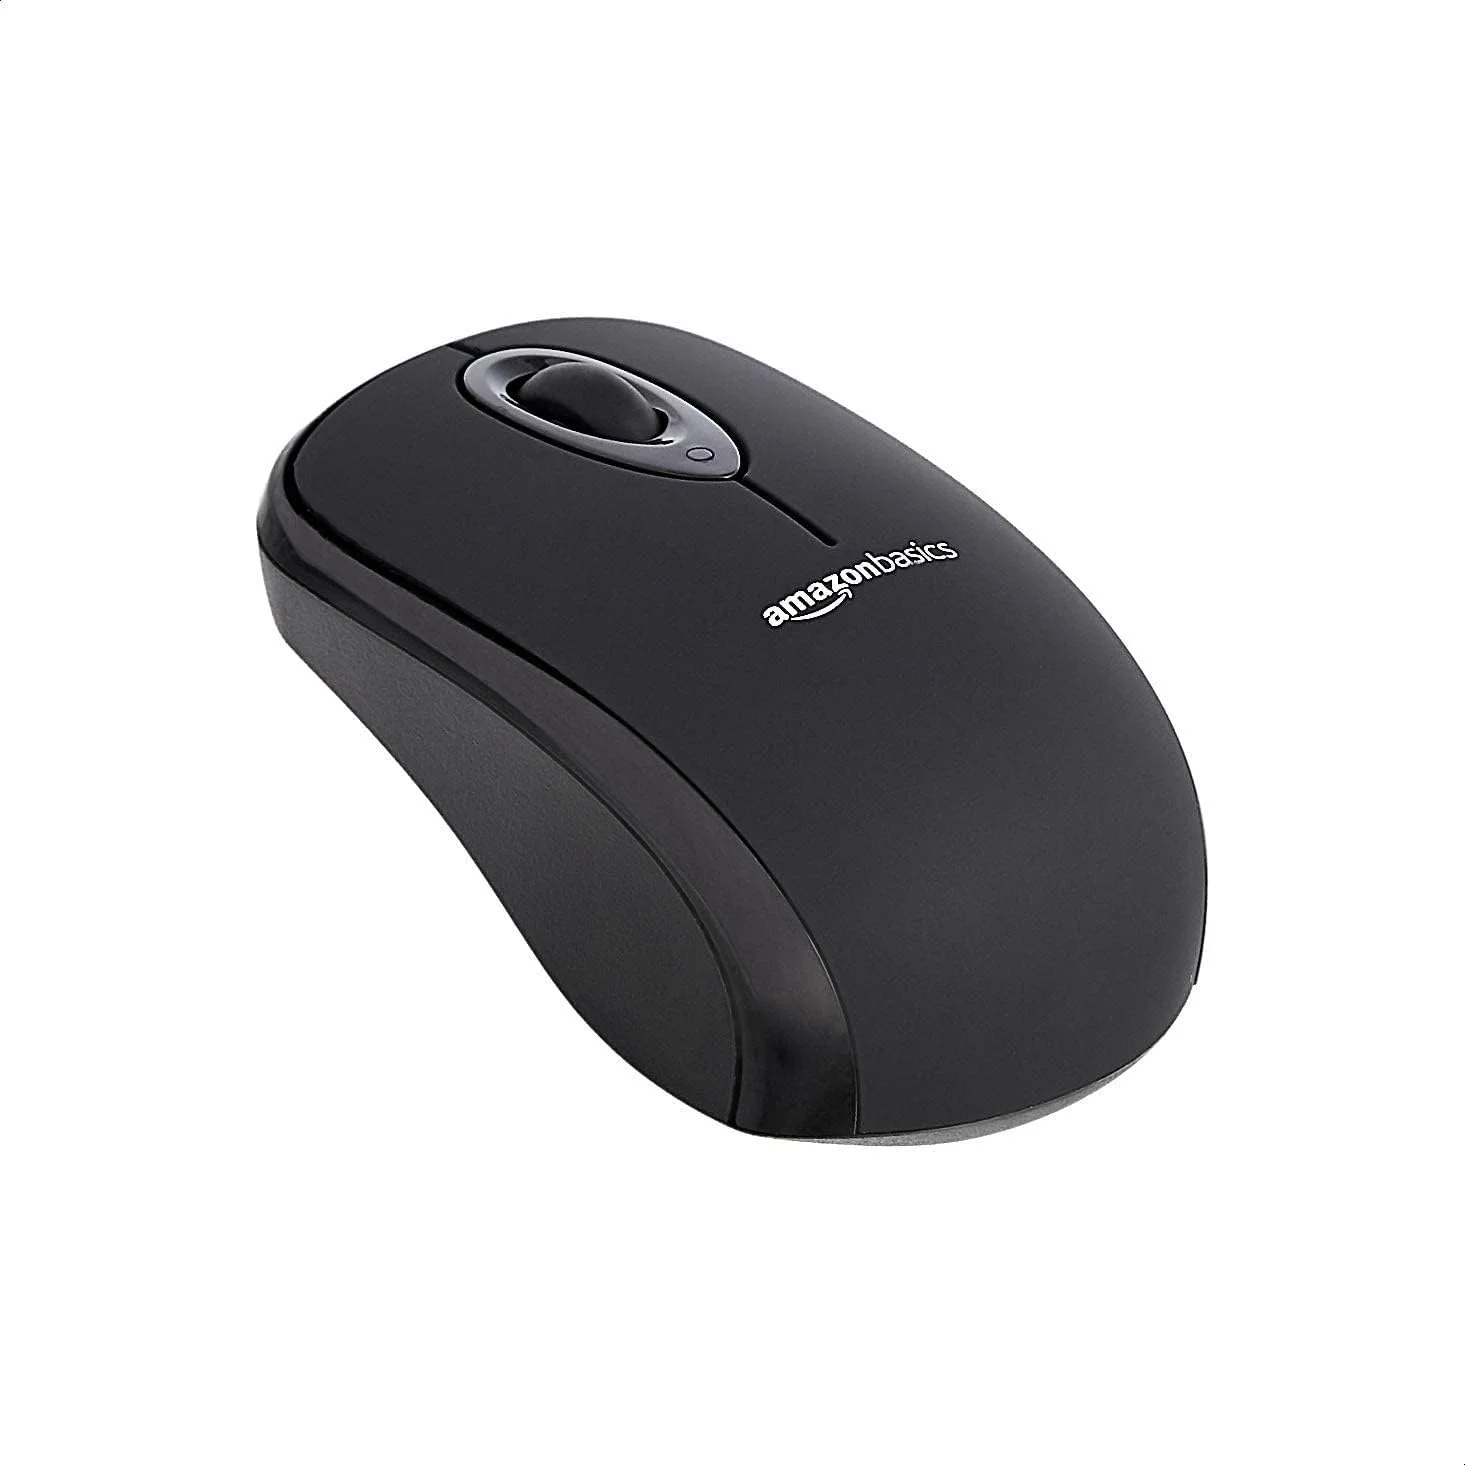 Amazon Basics Wireless Mouse Review